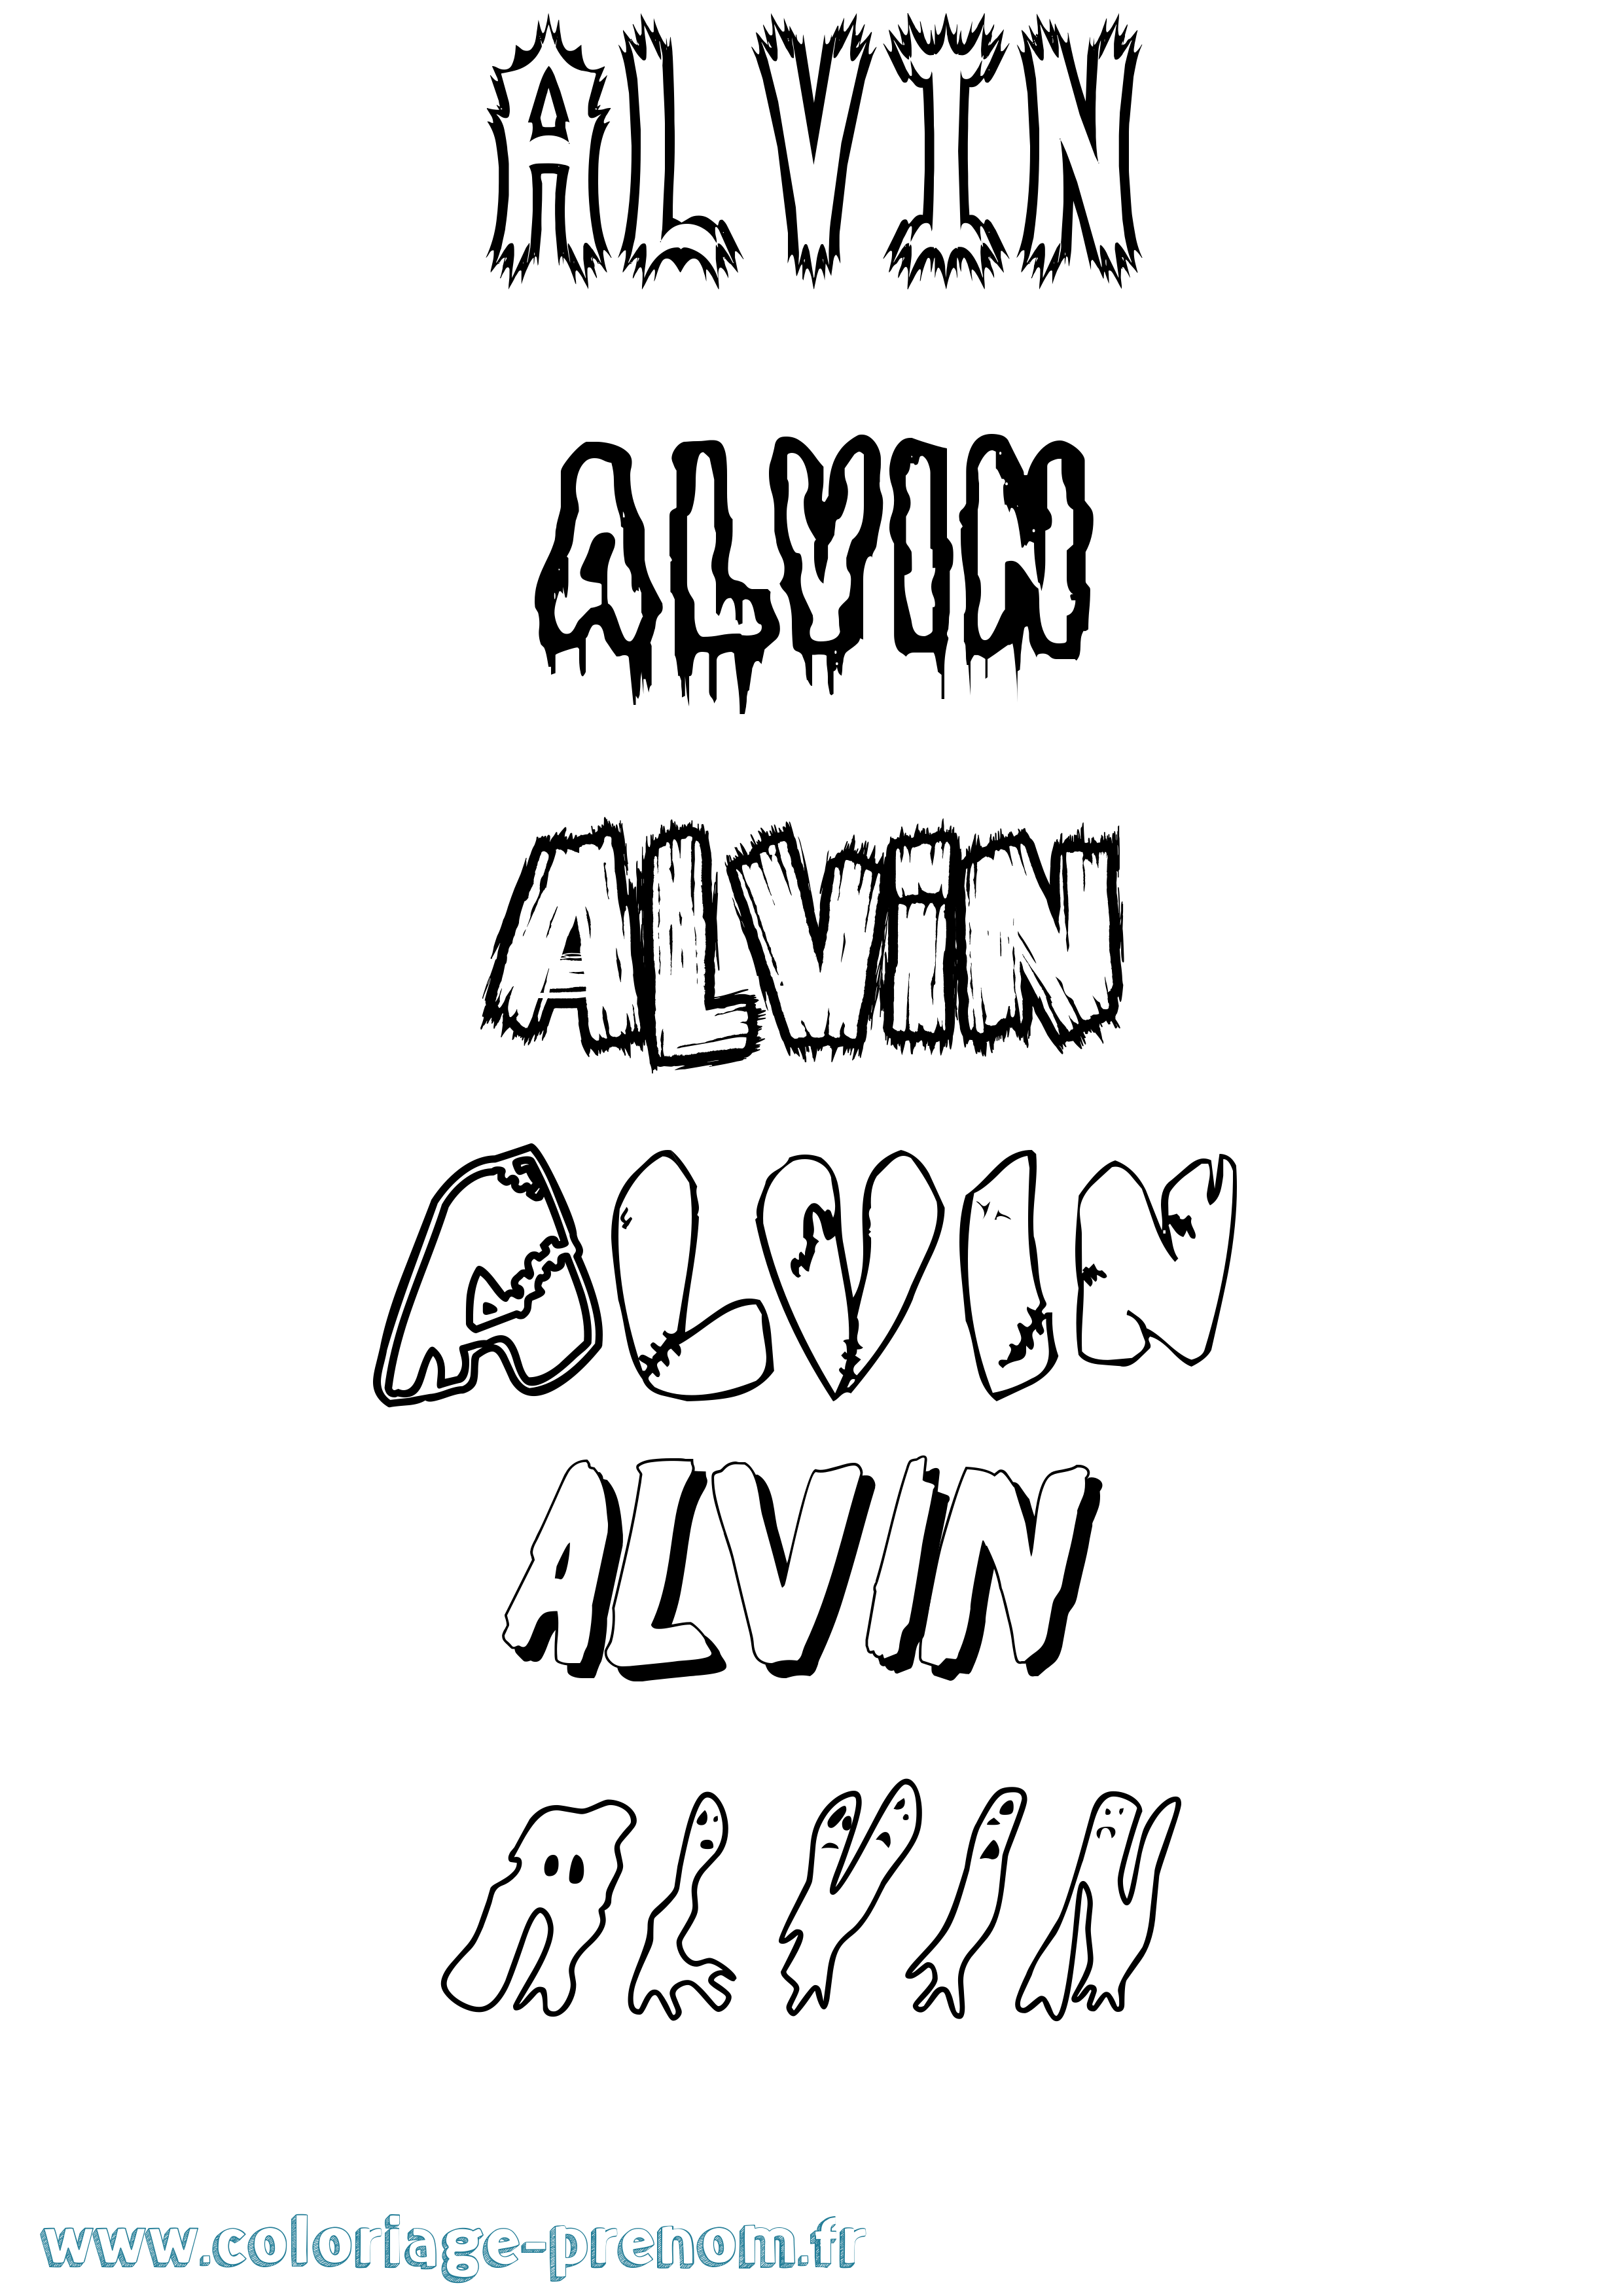 Coloriage prénom Alvin Frisson